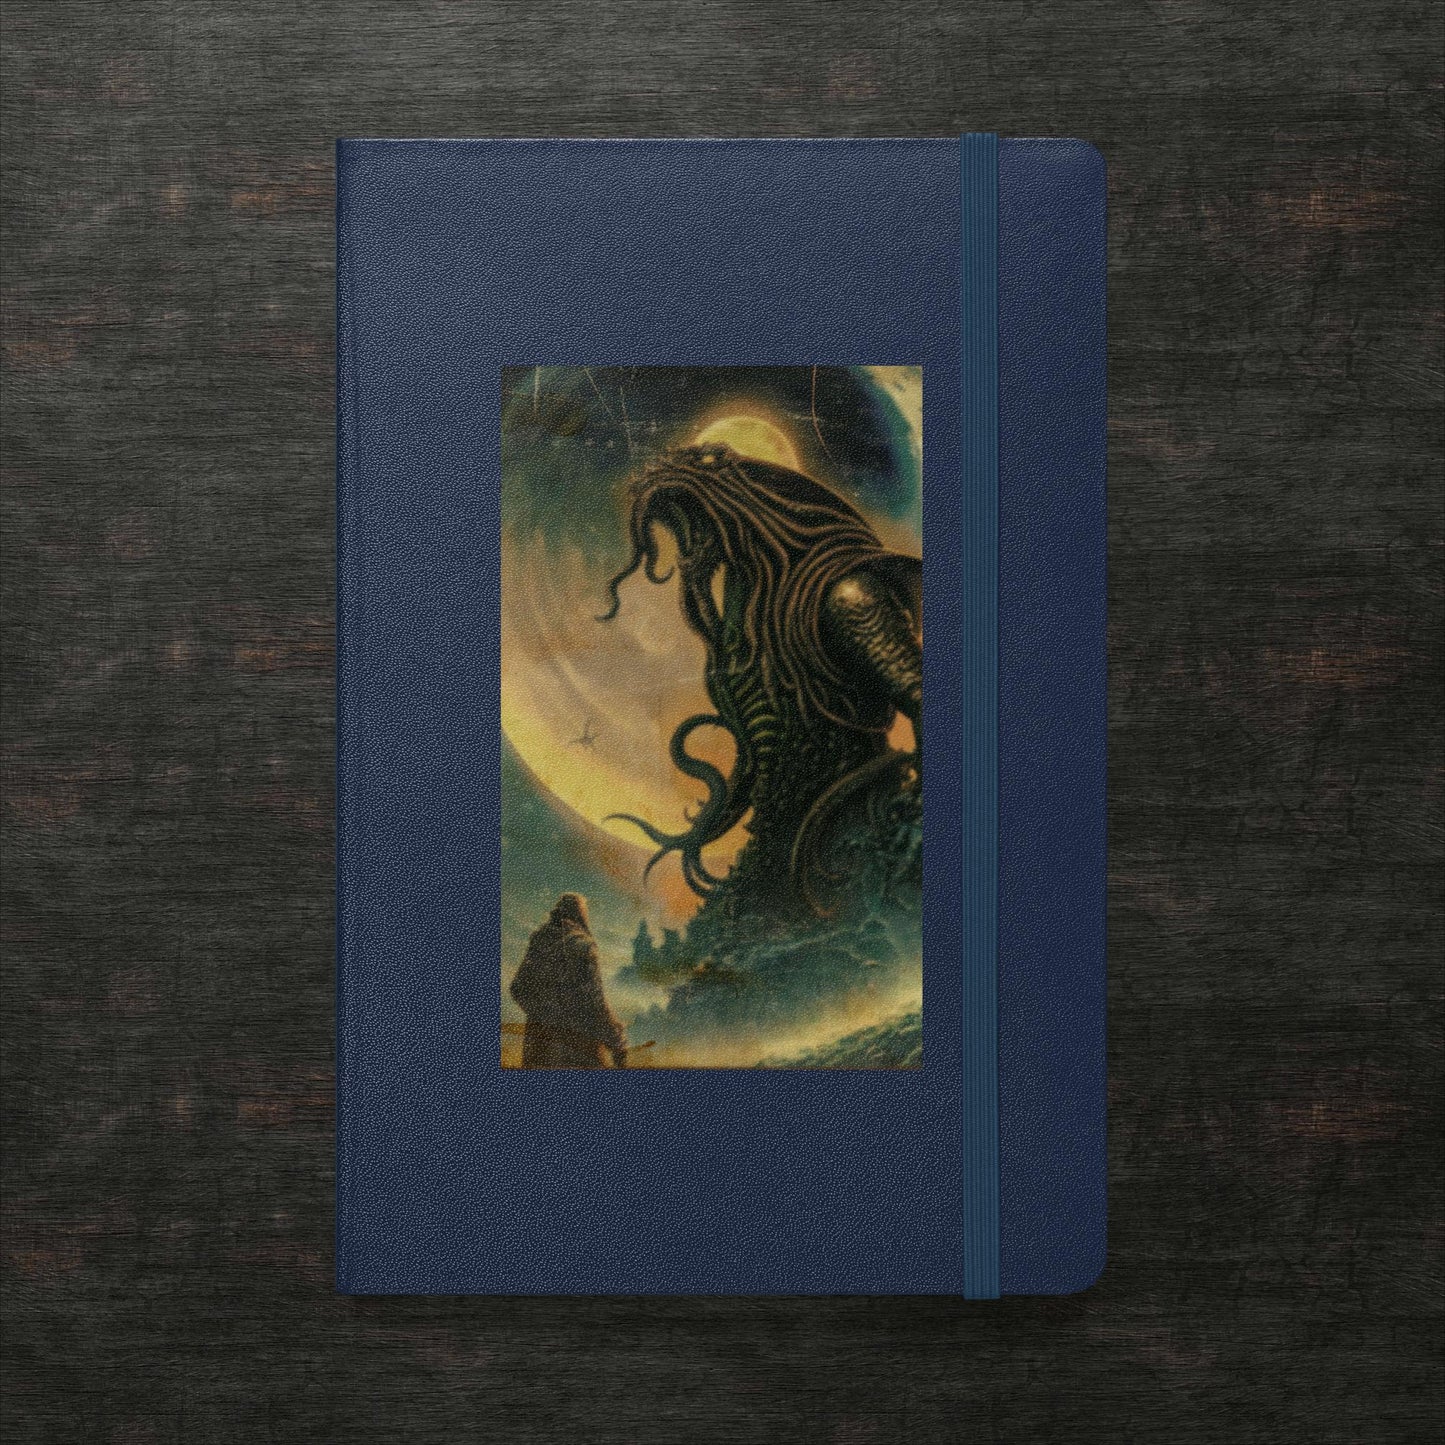 Cosmic Horror Pulp Art Hardcover Notebook